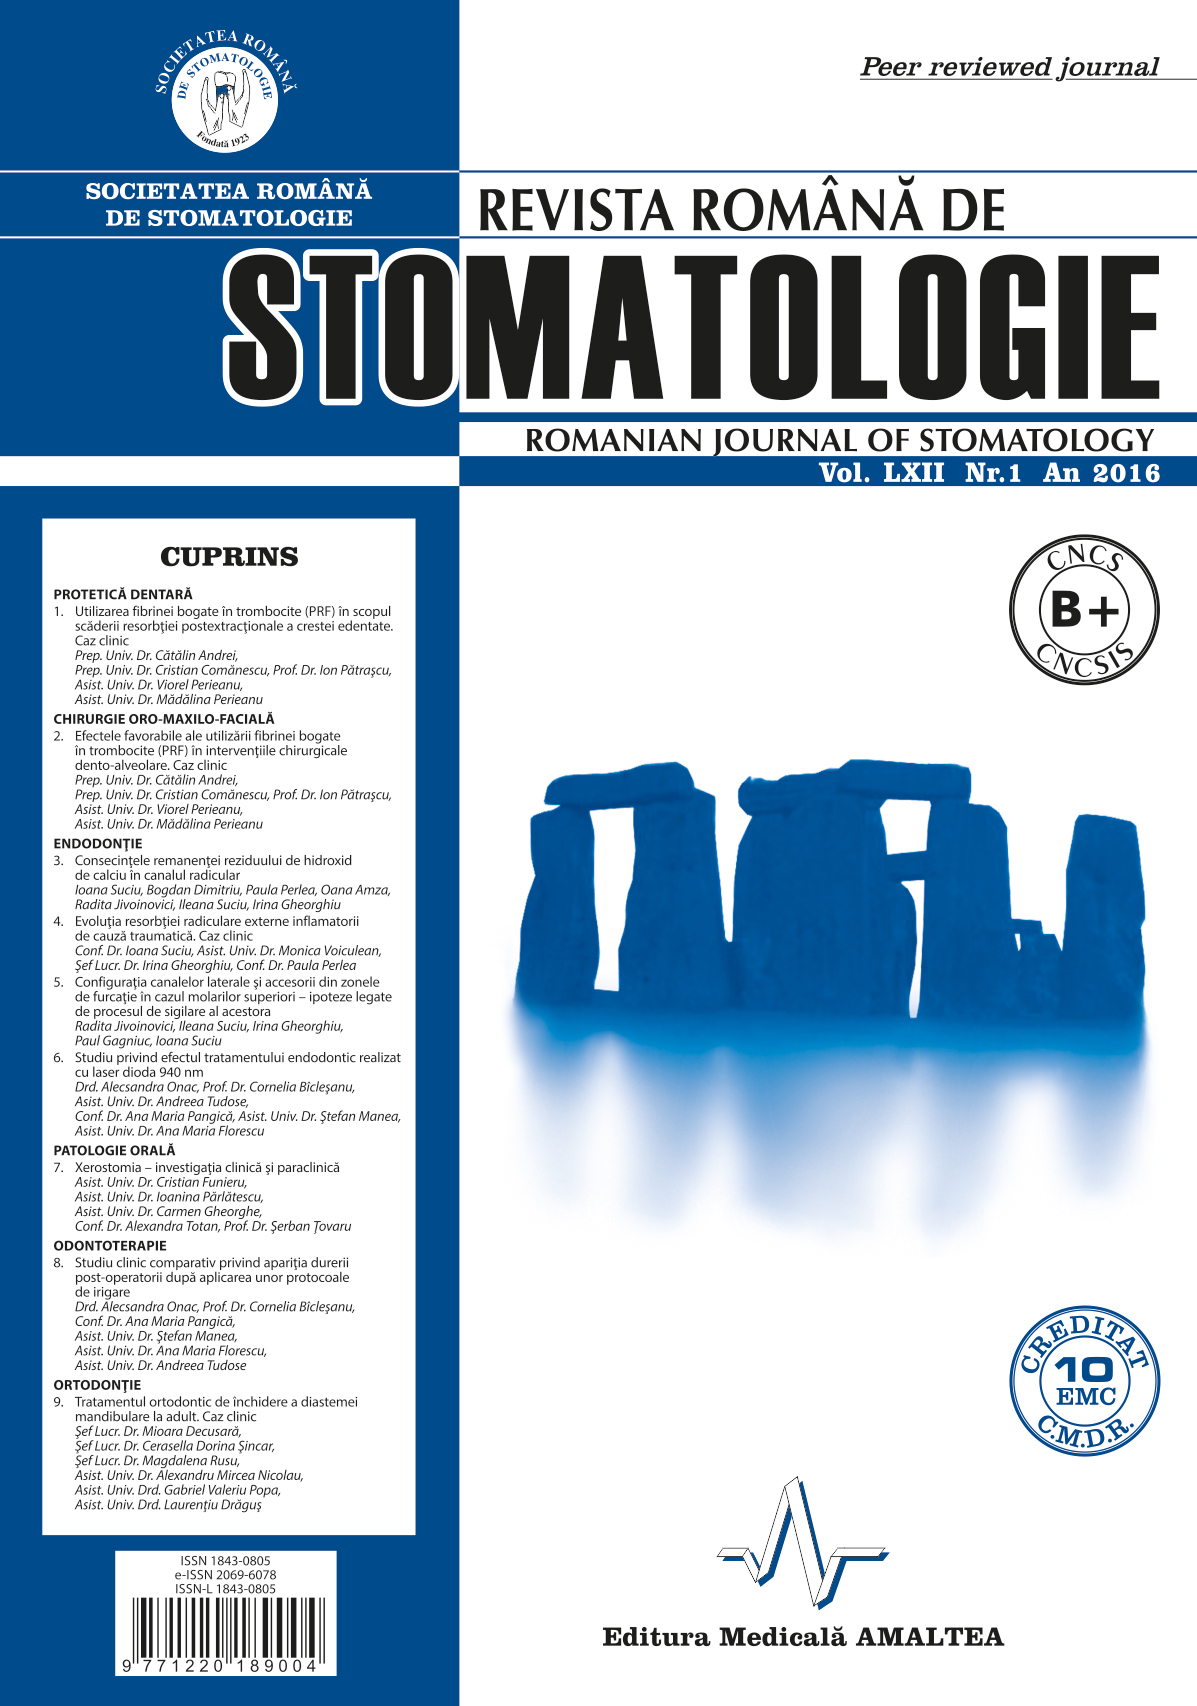 Revista Romana de STOMATOLOGIE - Romanian Journal of Stomatology, Vol. LXII, Nr. 1, An 2016